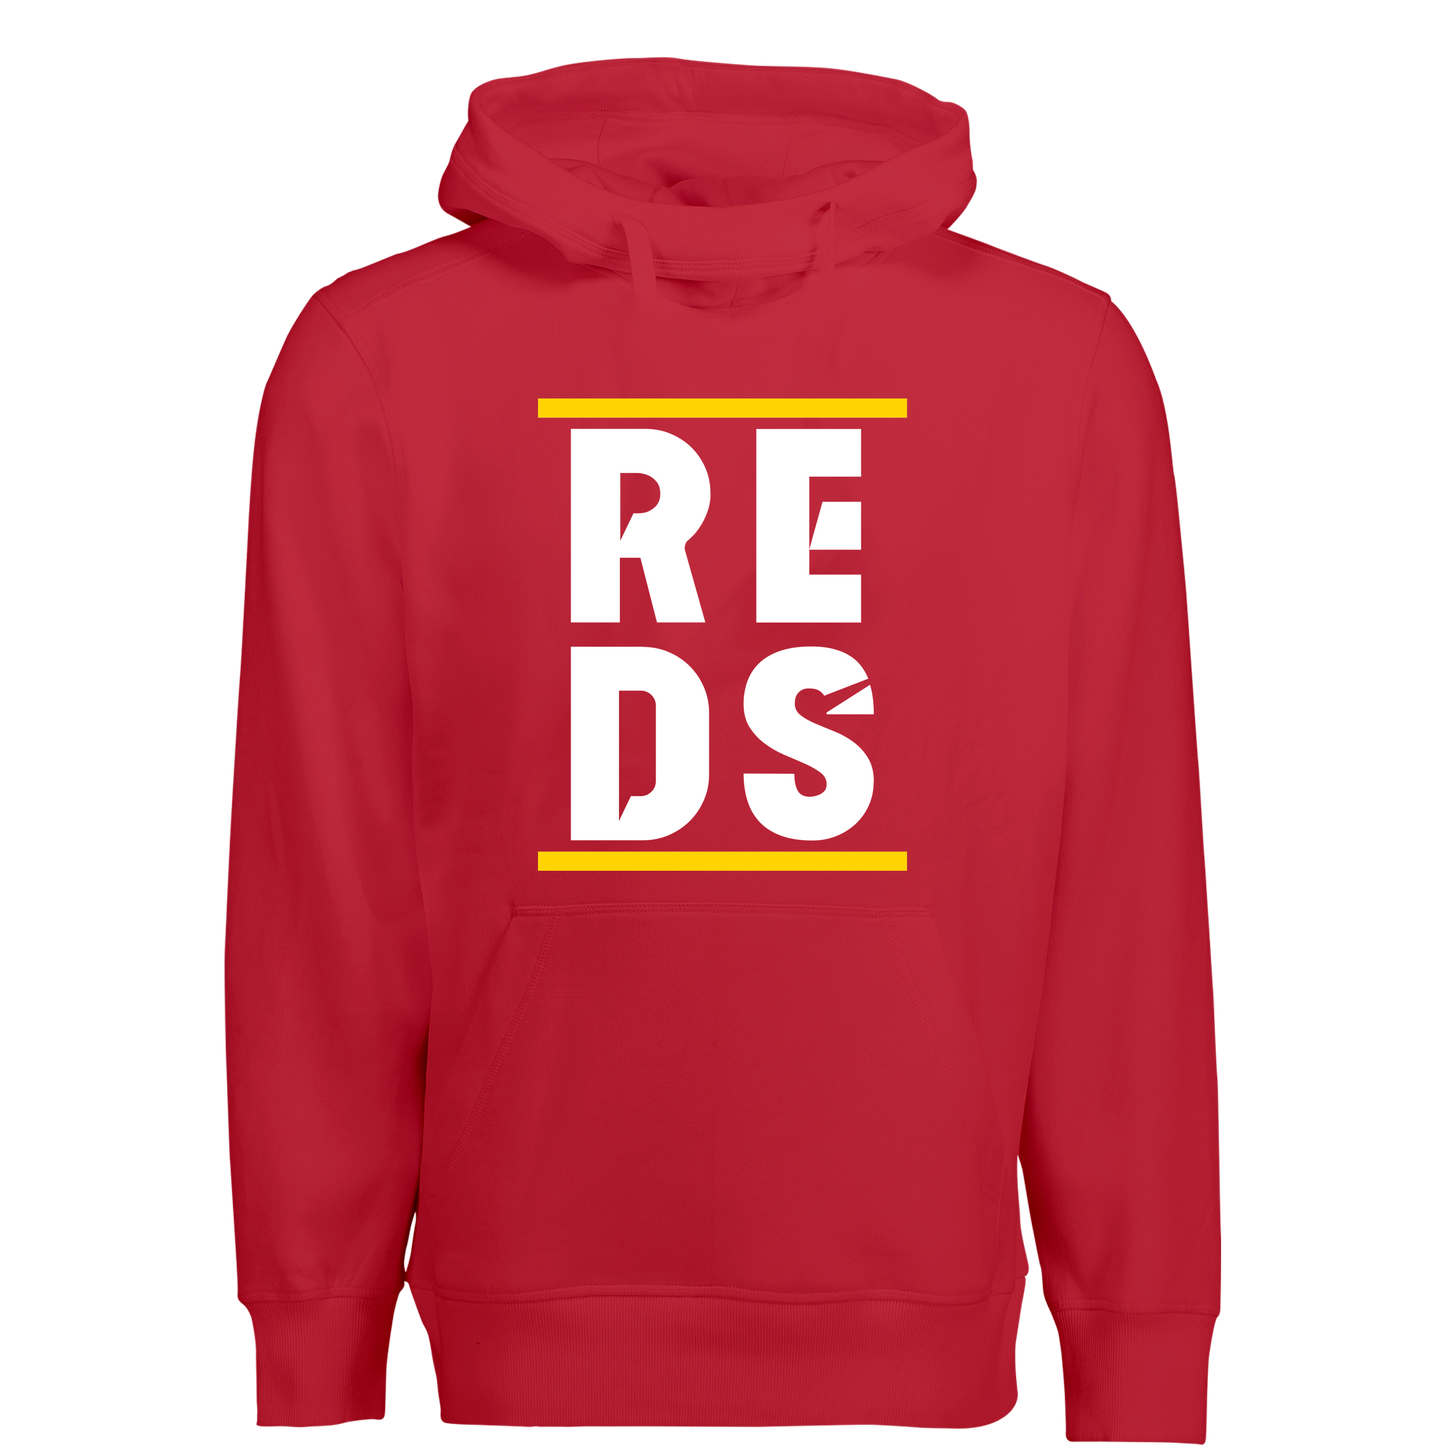 Reds - hoodie